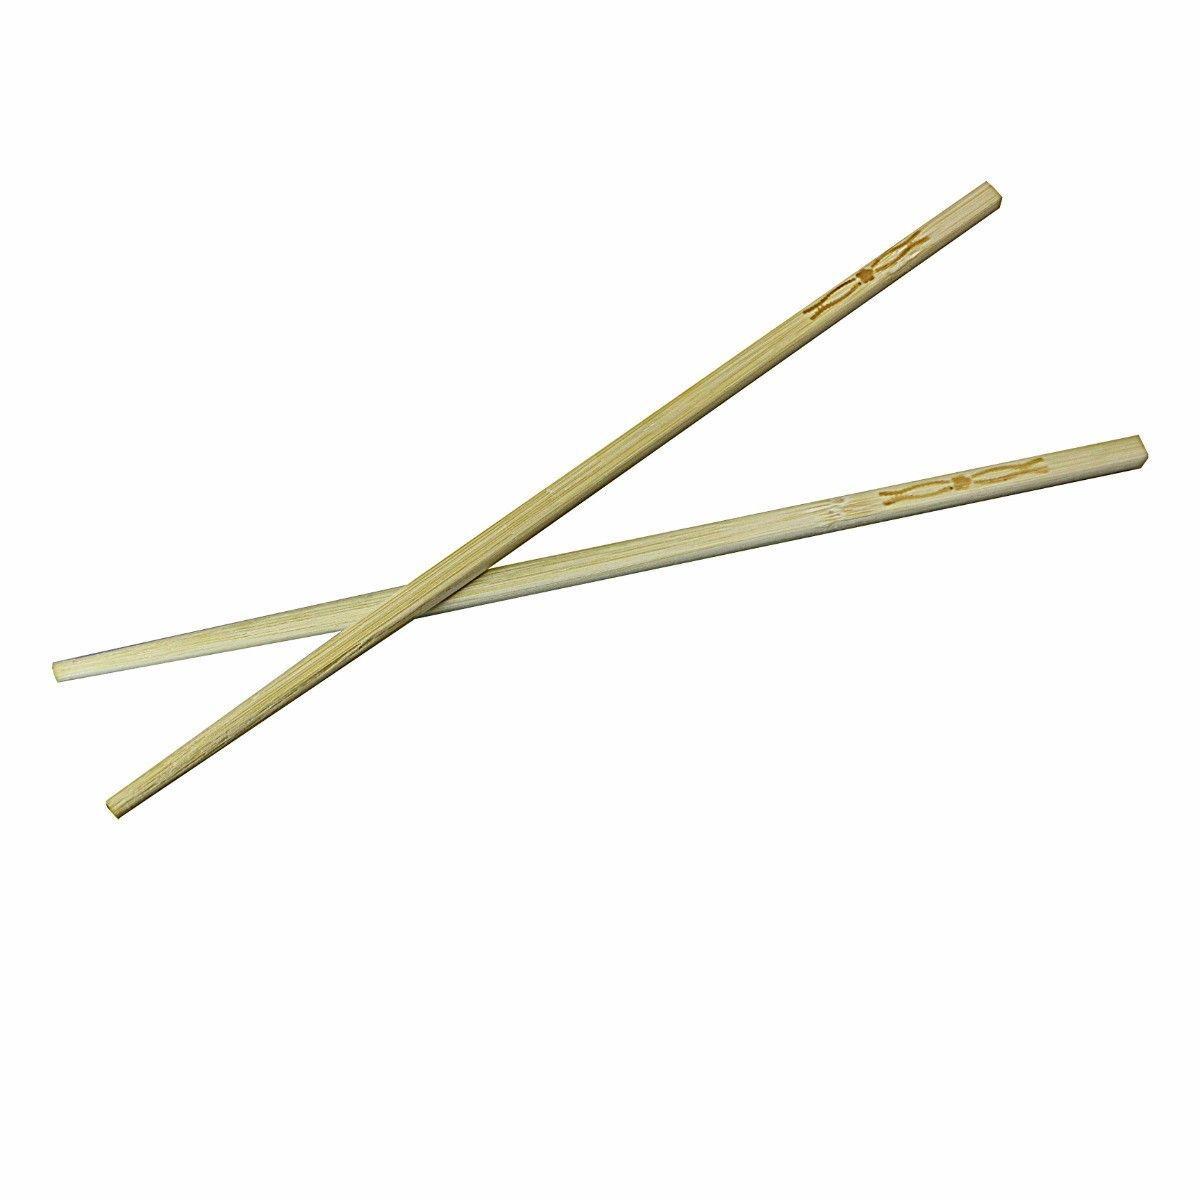 Wooden Bamboo Chopsticks 24 cm Pack of 5 2357 (Large Letter)